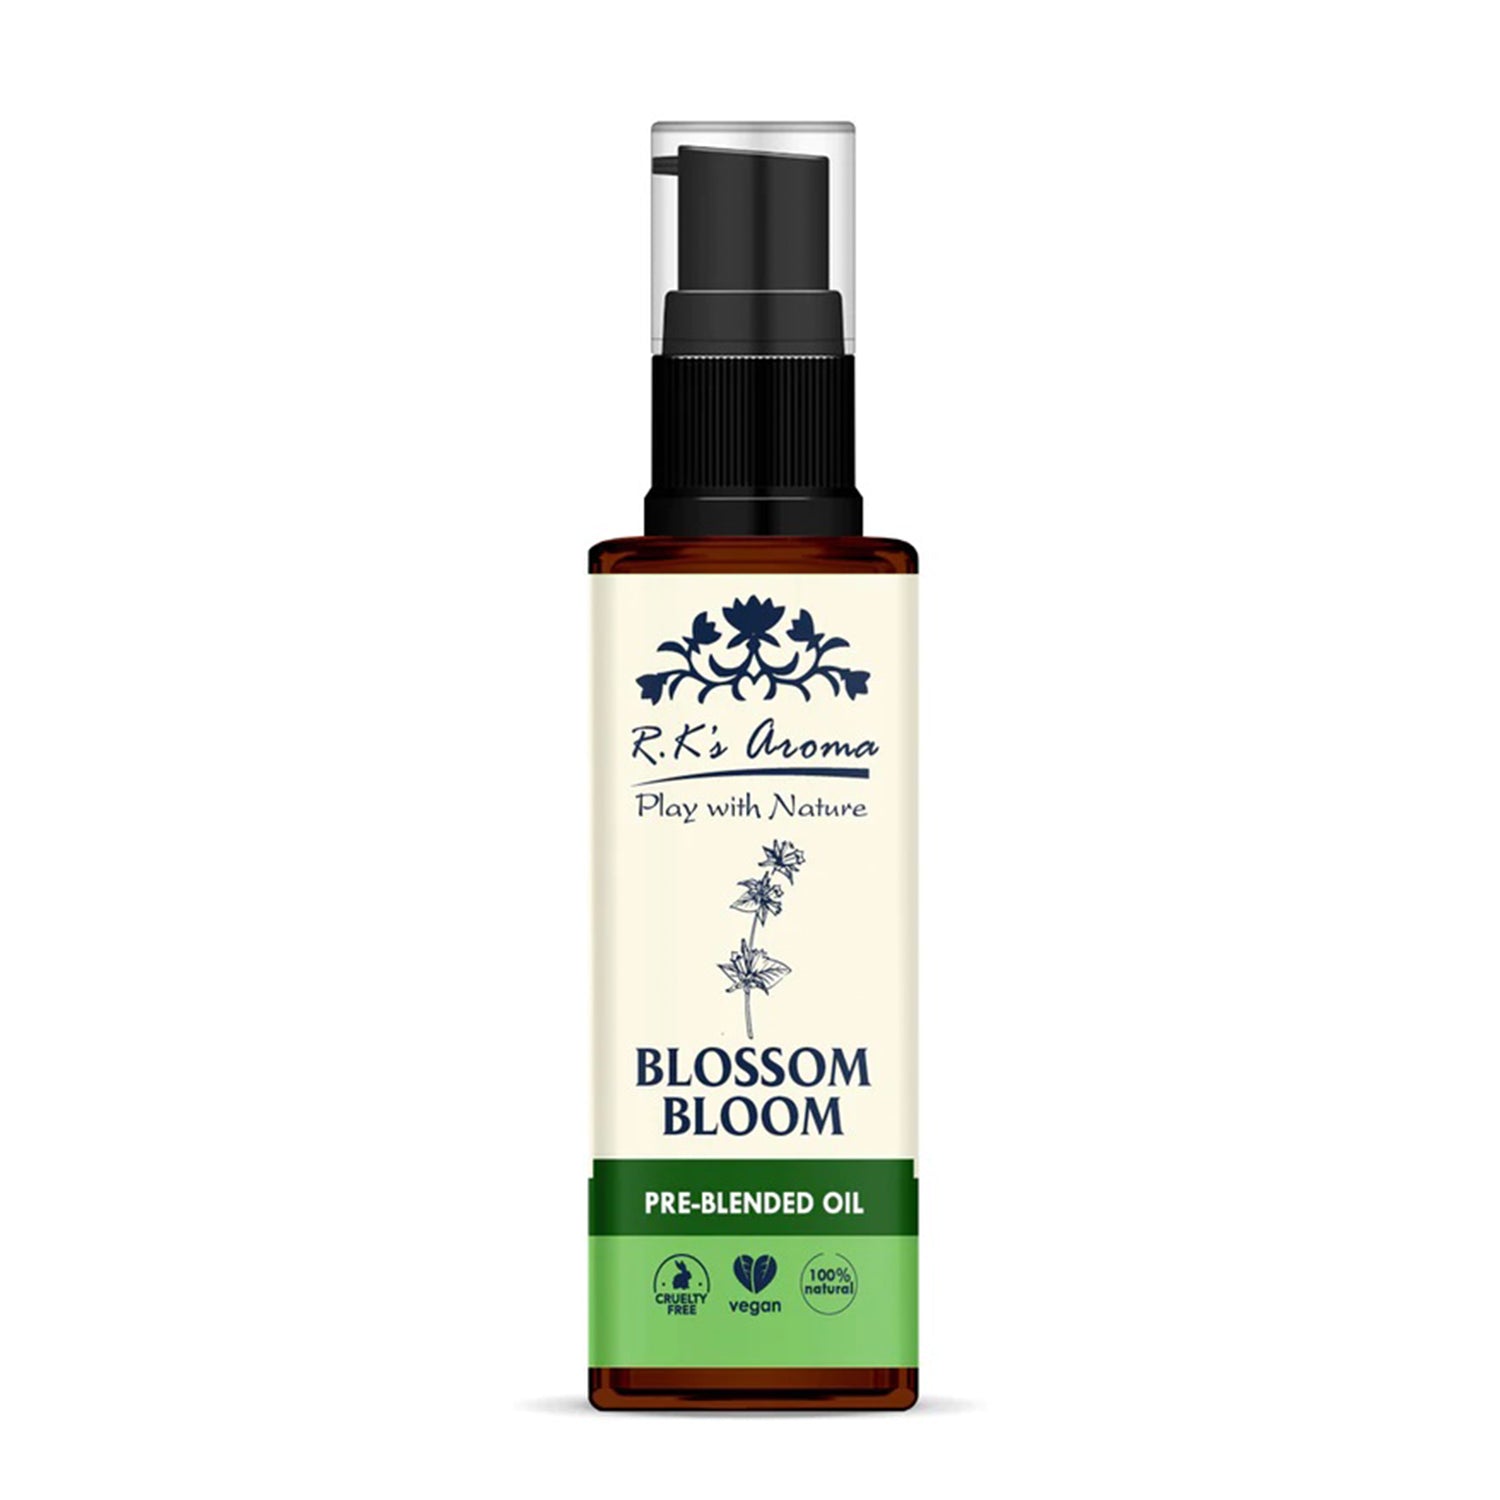 Blossom Bloom (Body) Oil